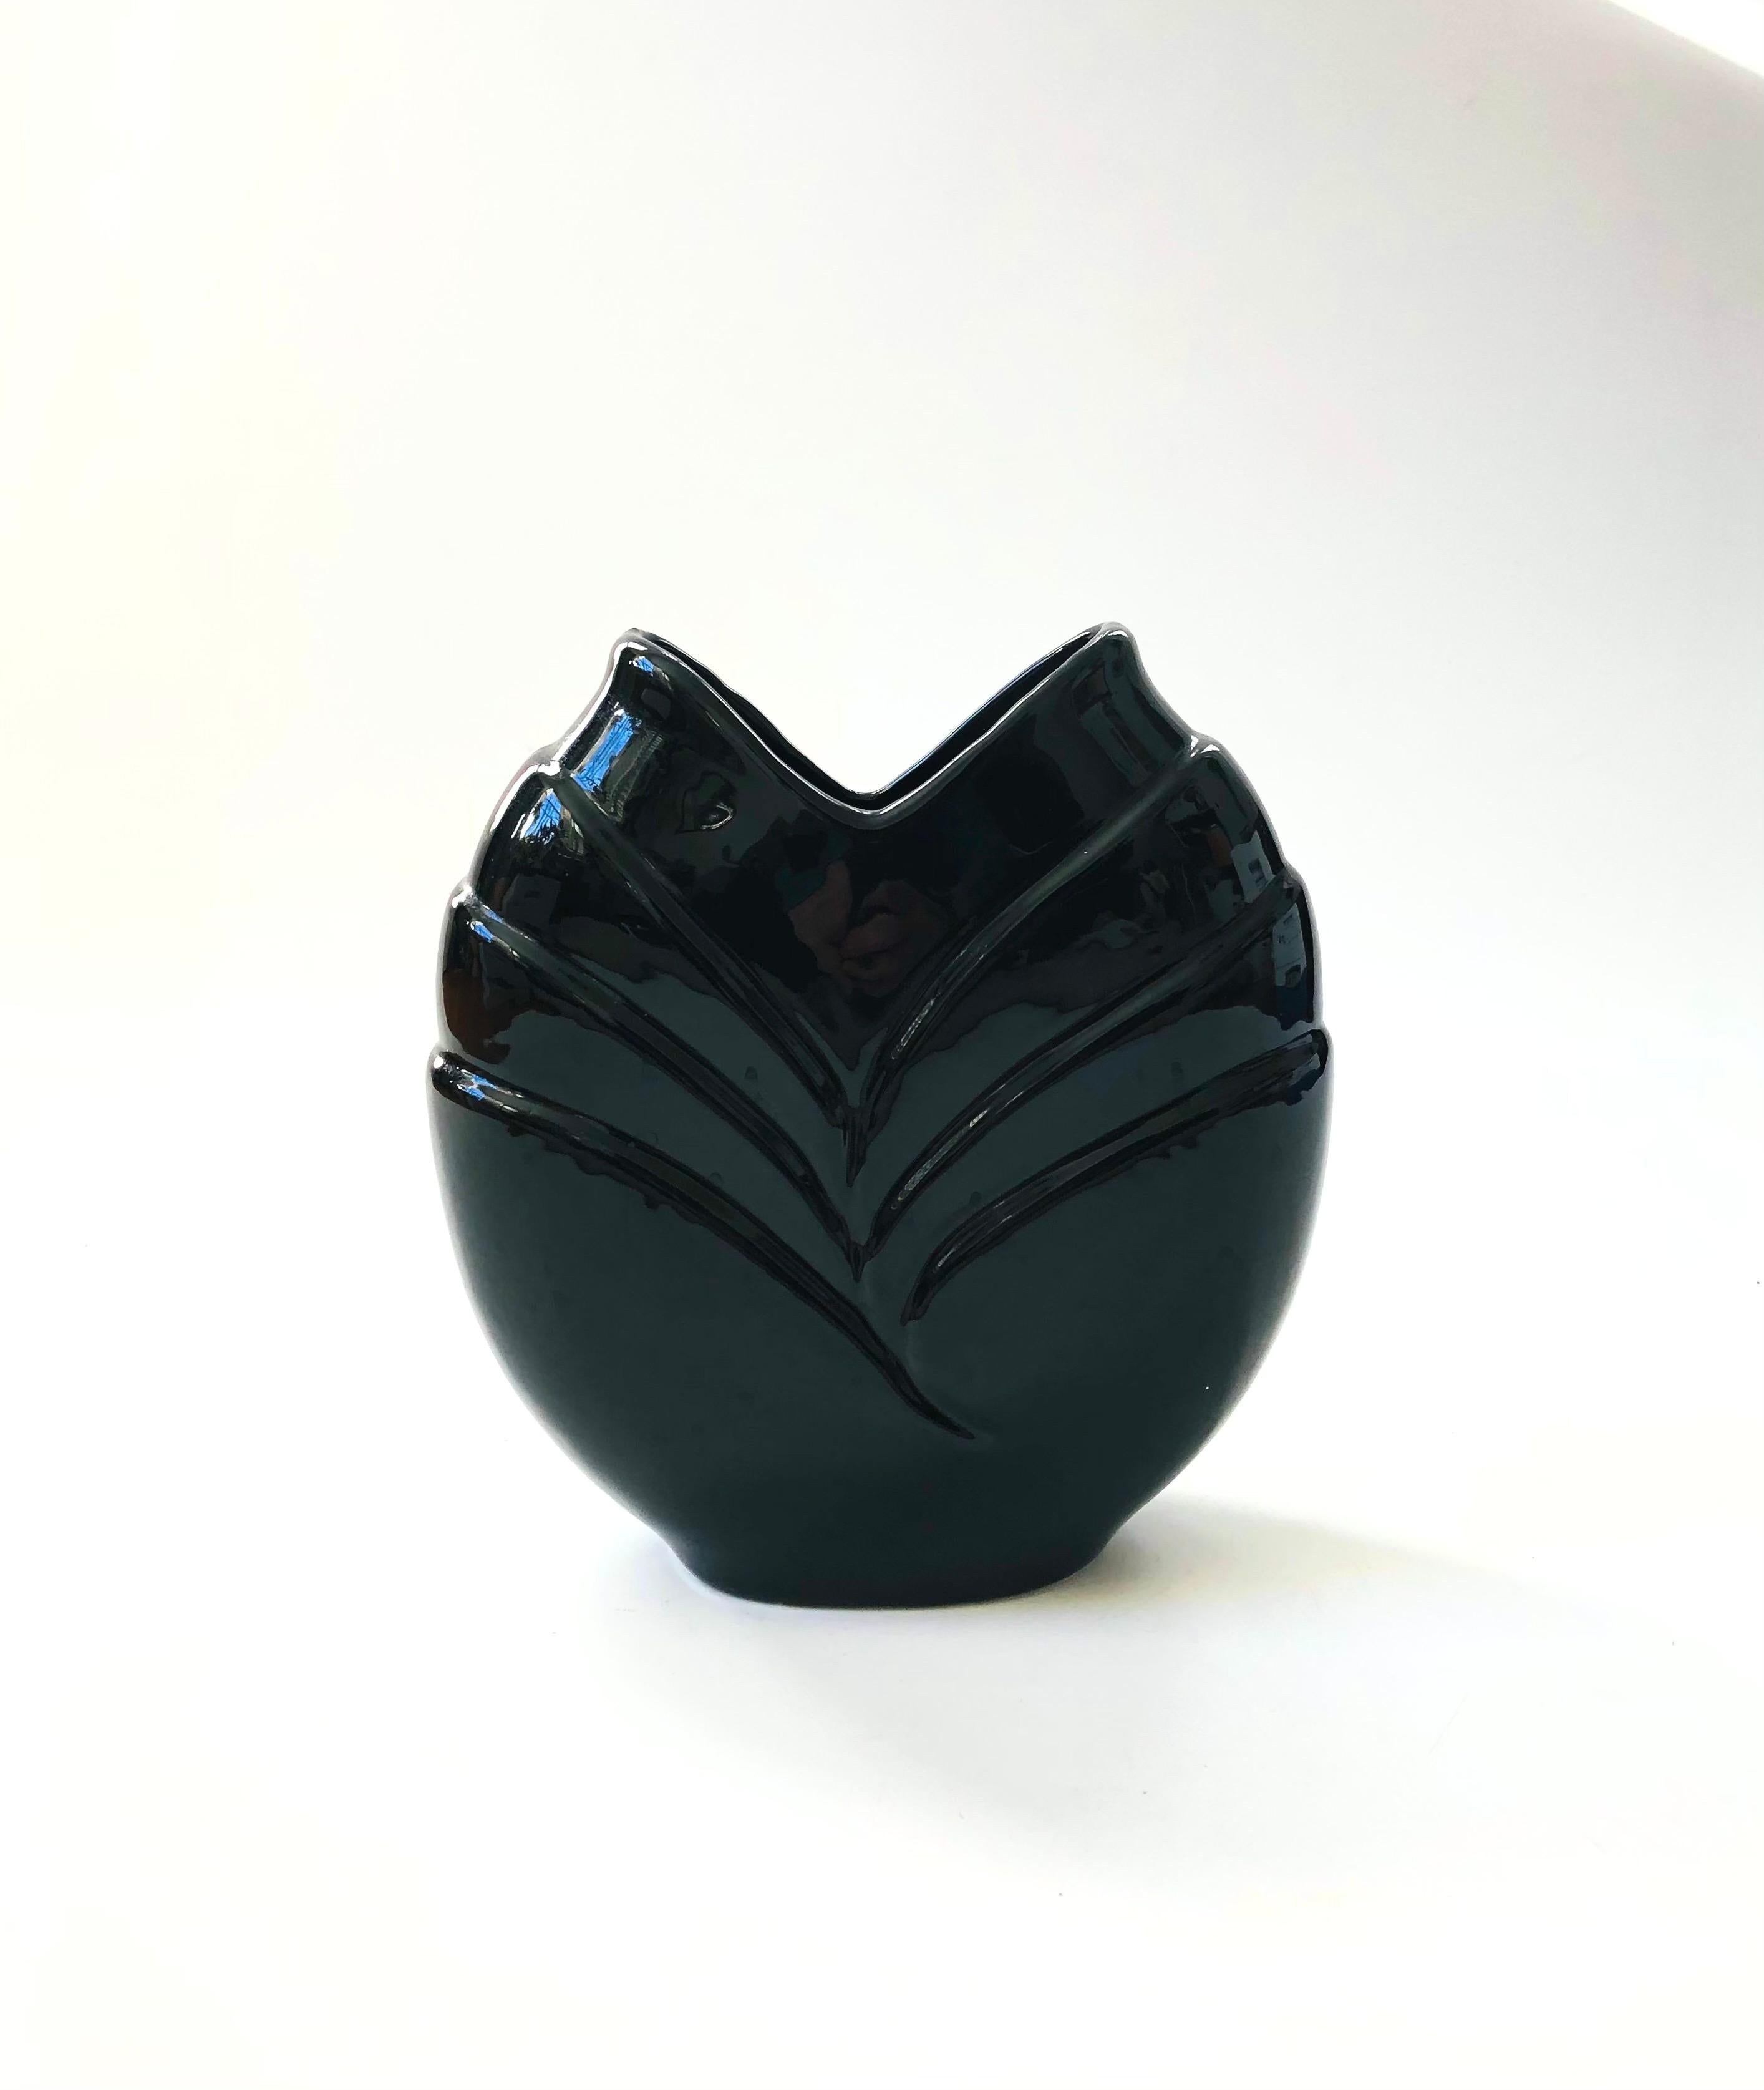 A wonderful vintage 80s modern ceramic vase. High gloss black finish with a curved embossed design formed onto each side.

